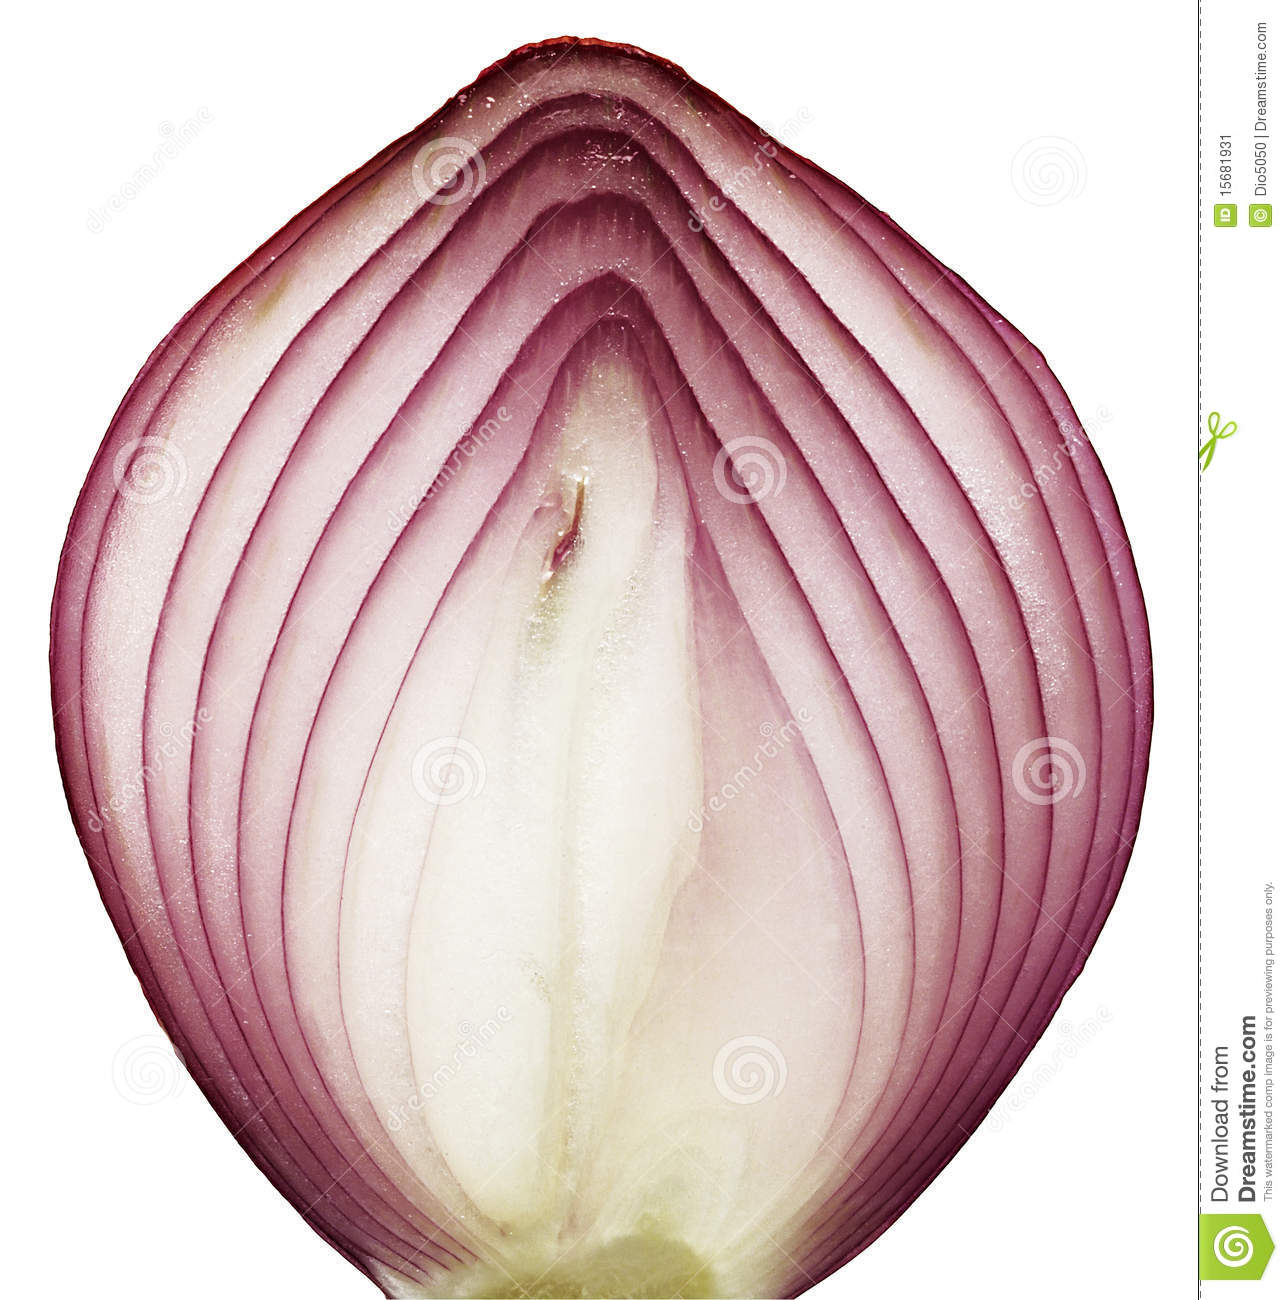 Onion Slice Stock Image   Image  15681931